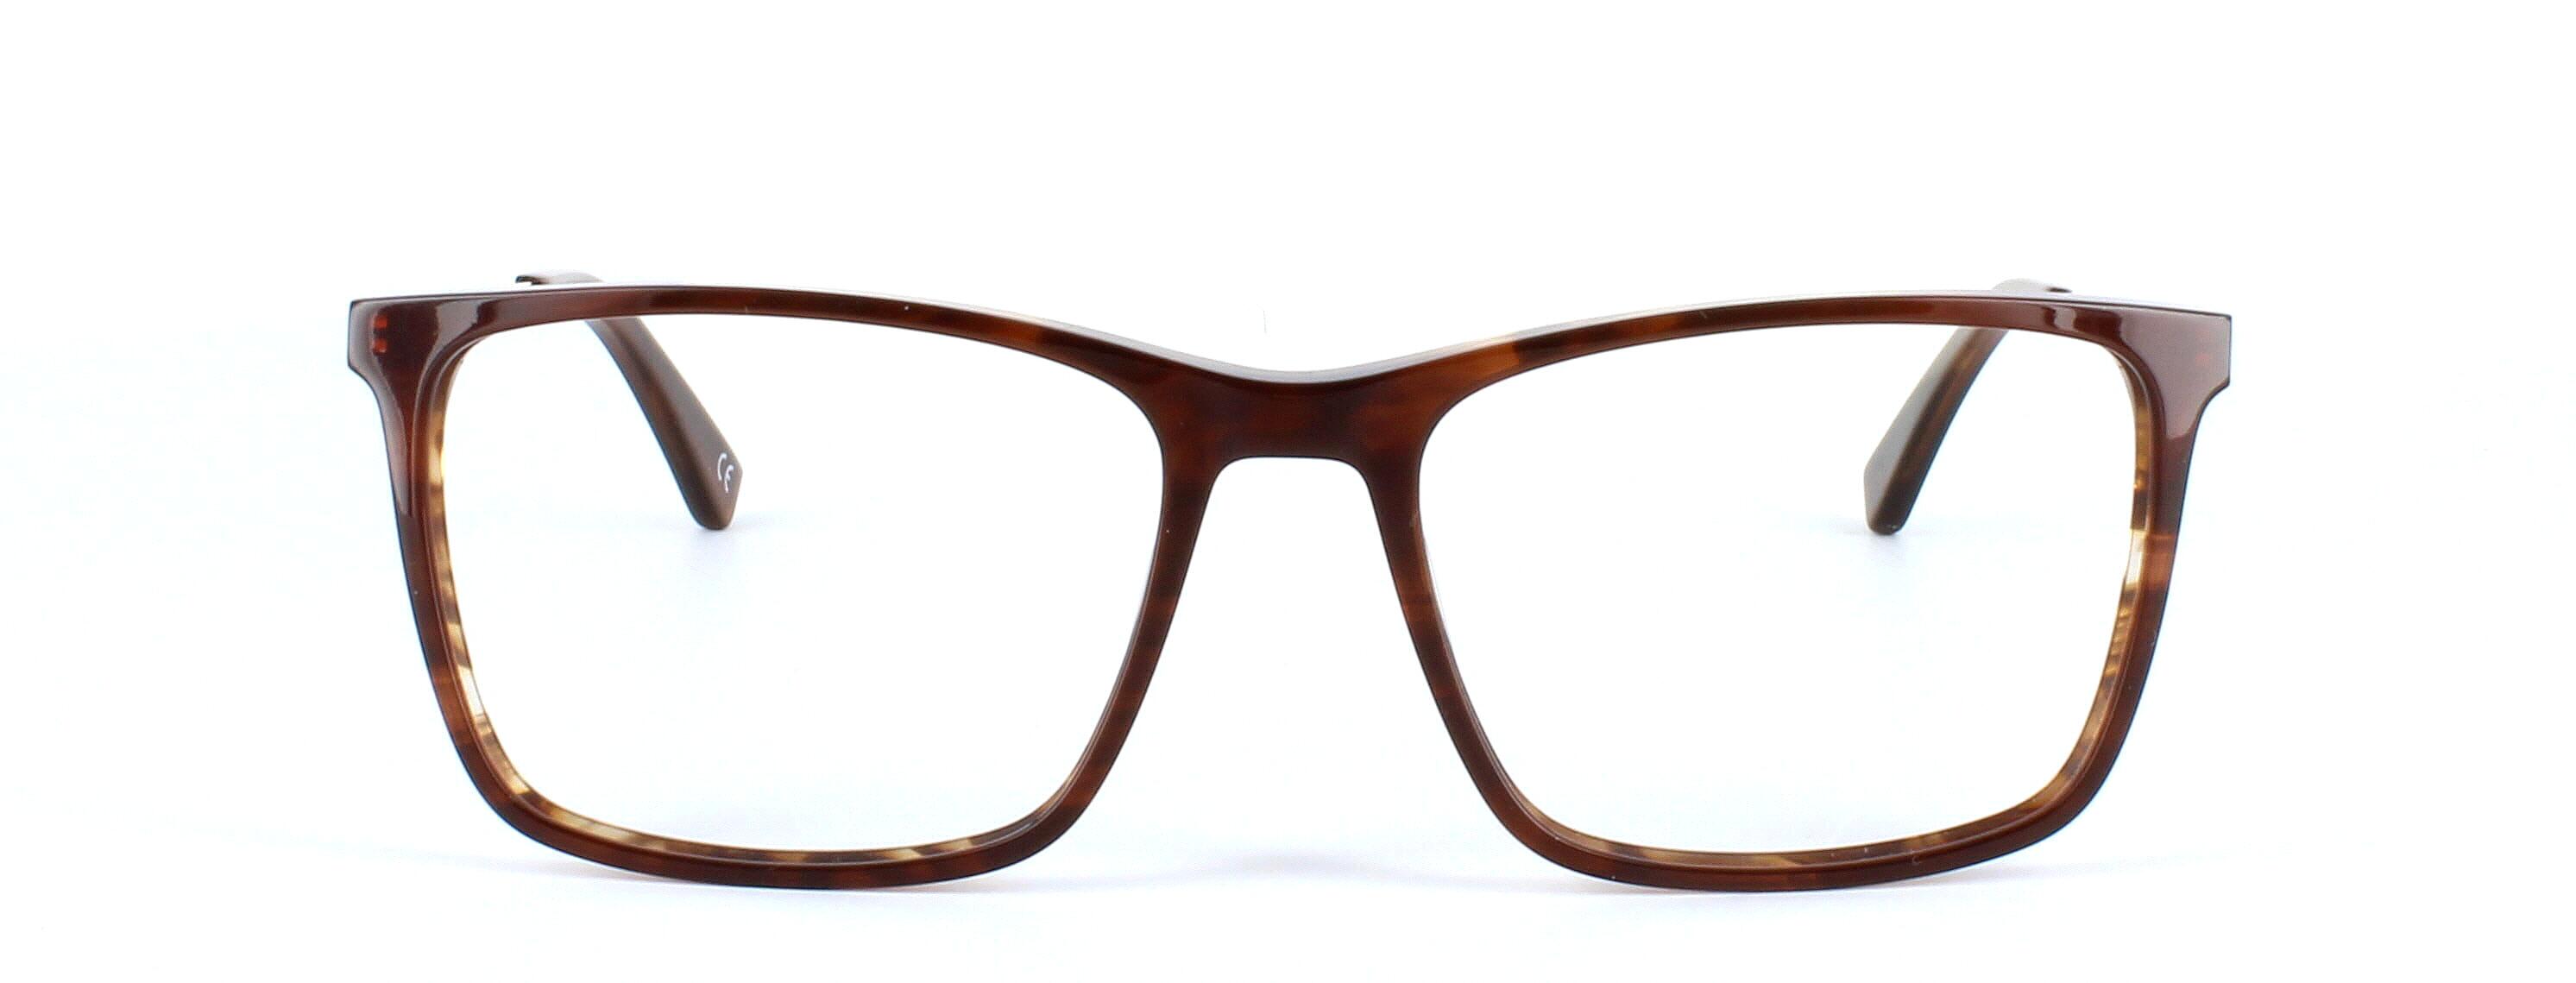 Farleigh - Men's full rim acetate glasses frame in shiny havannah - image view 5